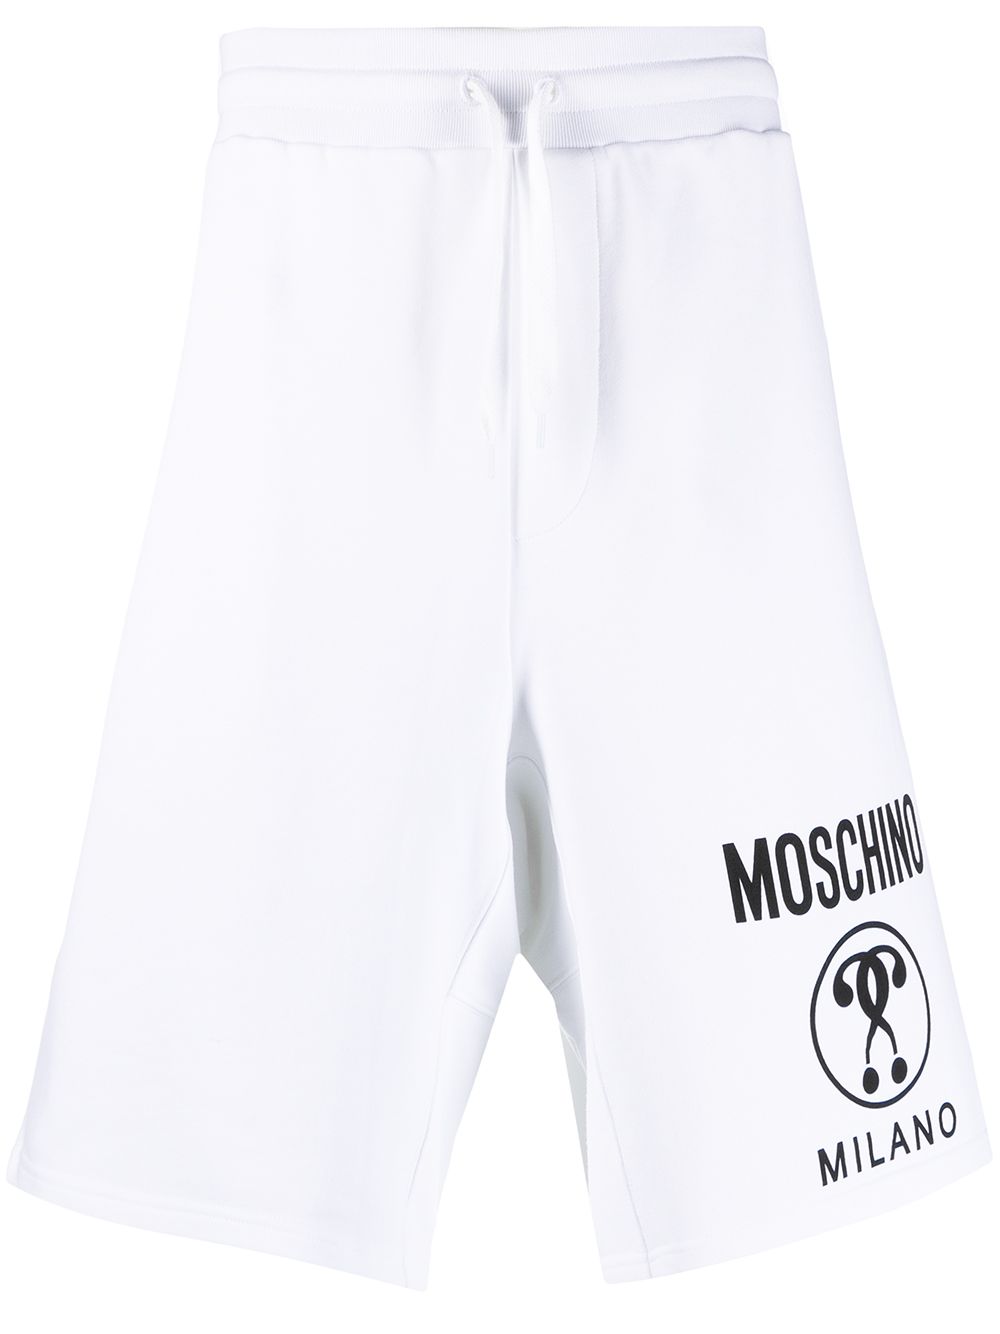 фото Moschino спортивные шорты double question mark